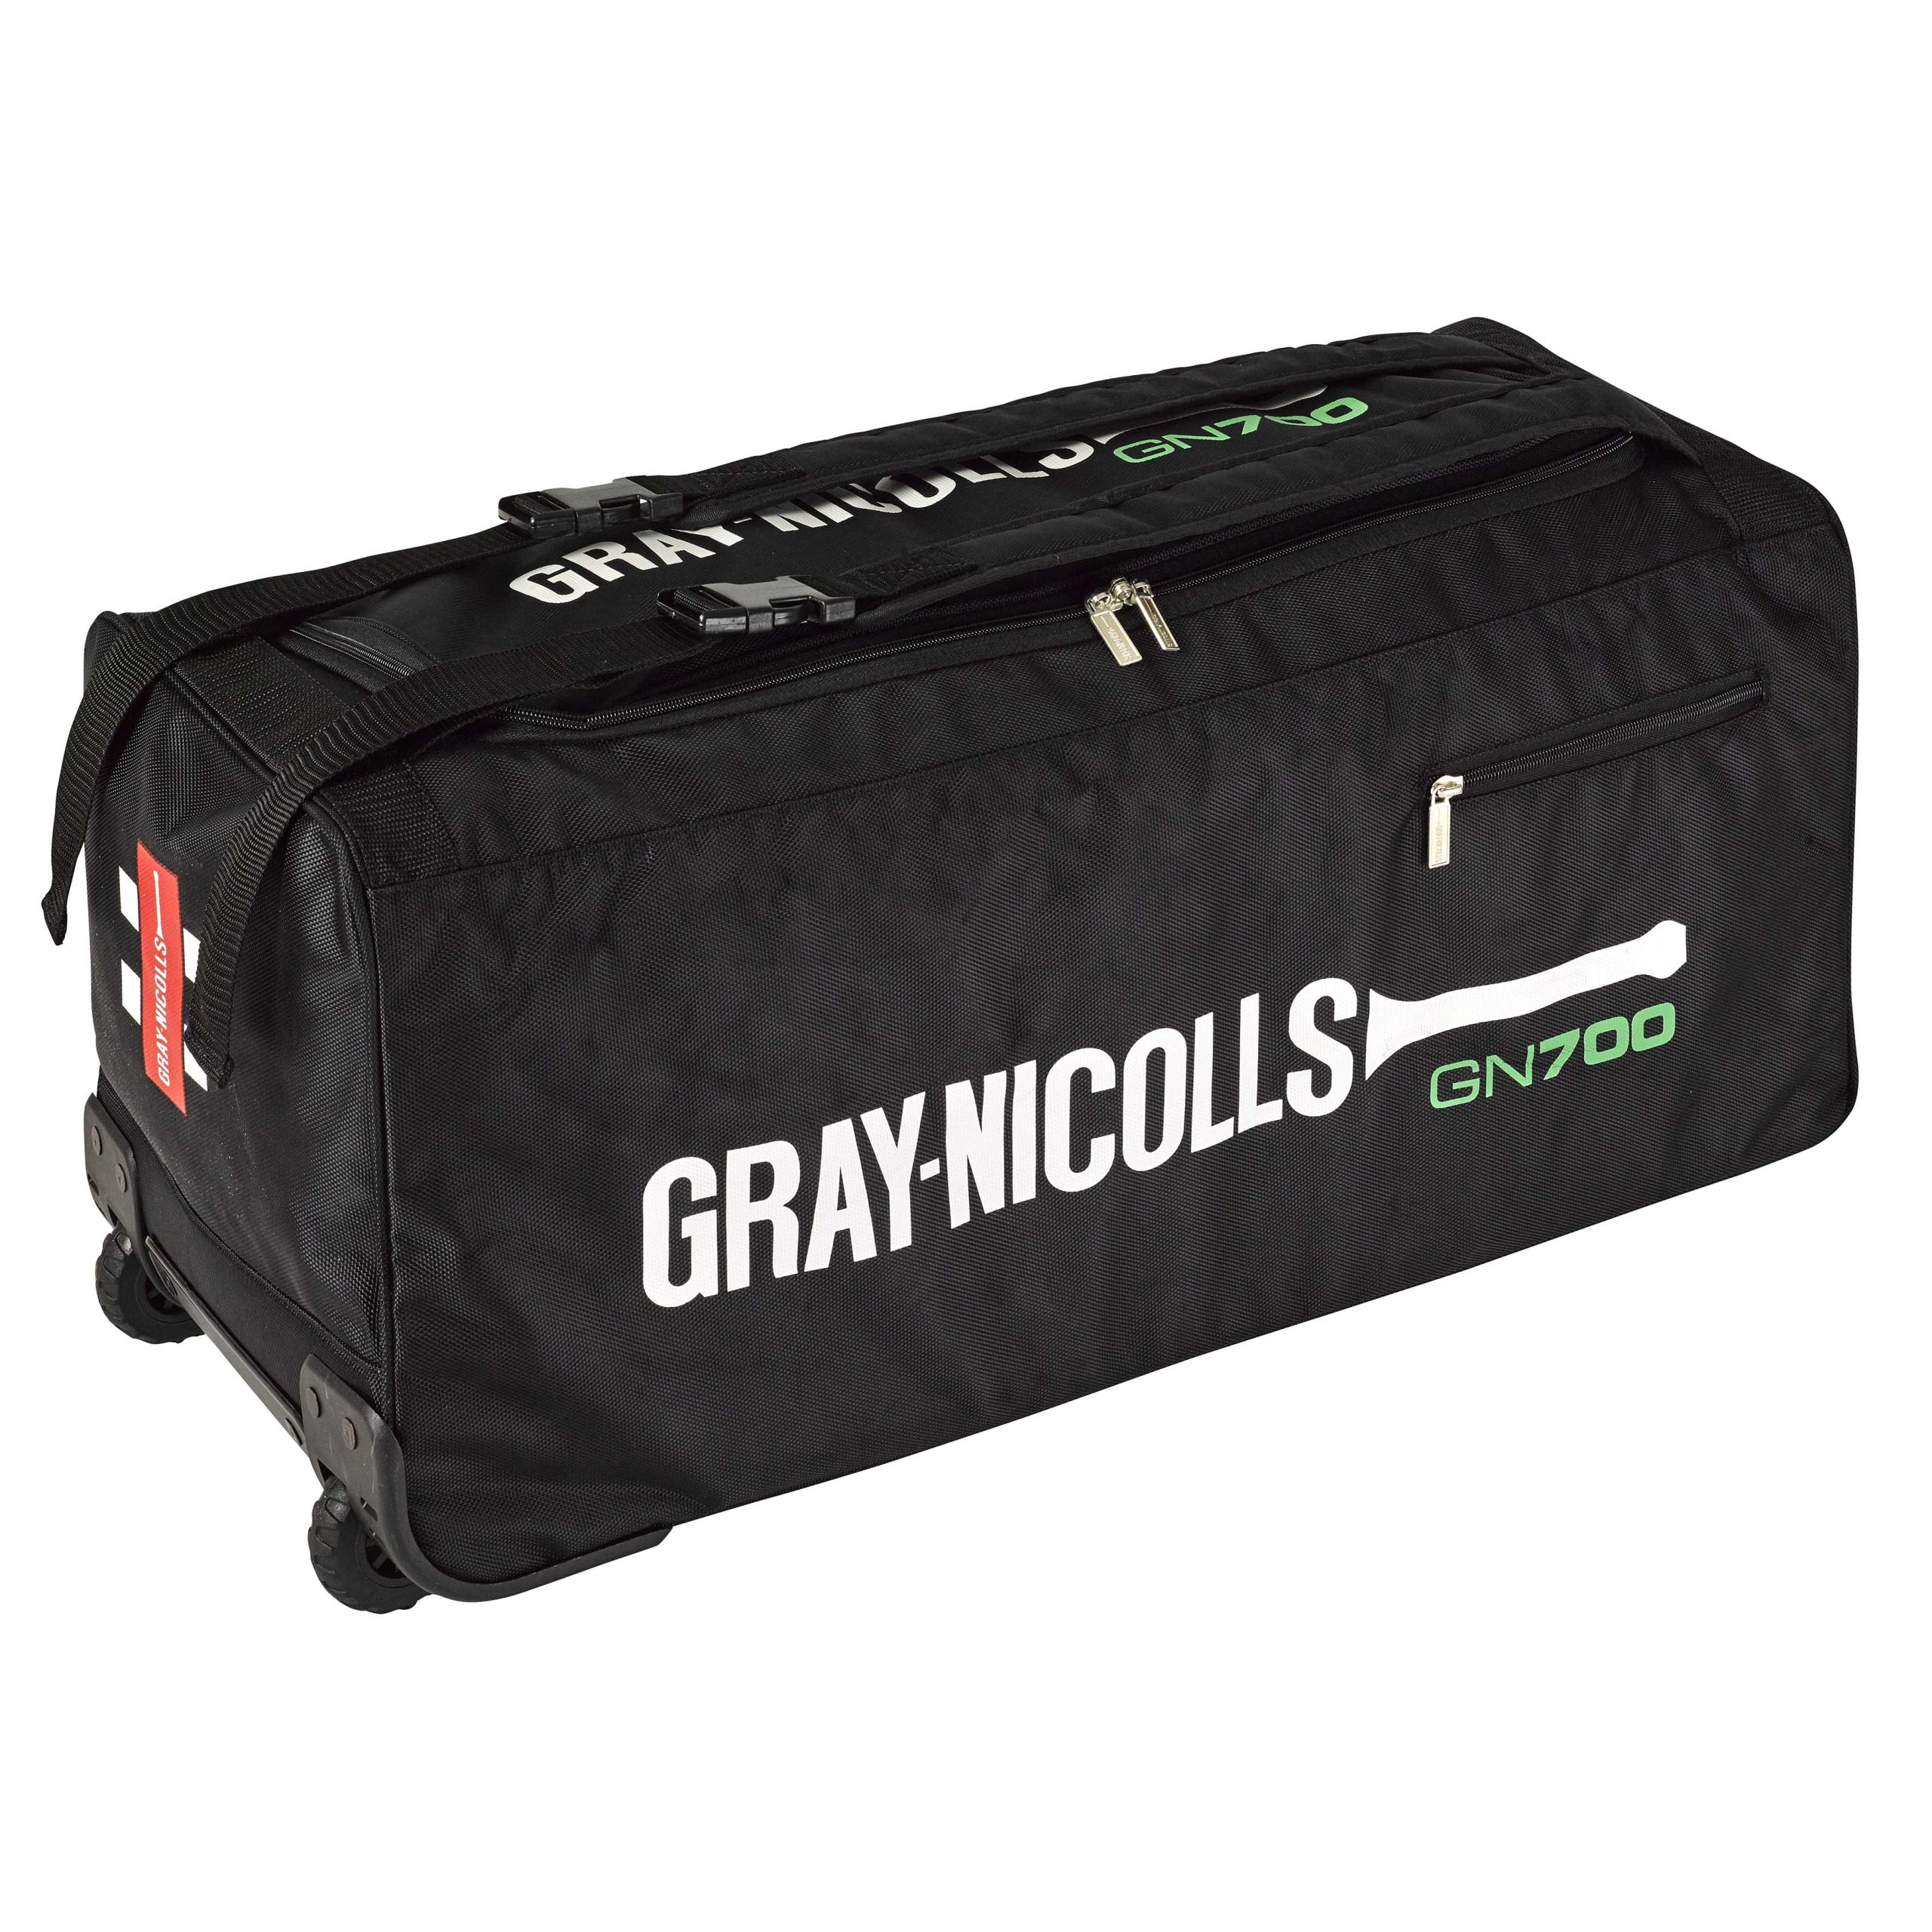 Gray Nicolls GN700 Wheel Bag – Black/Green 26158